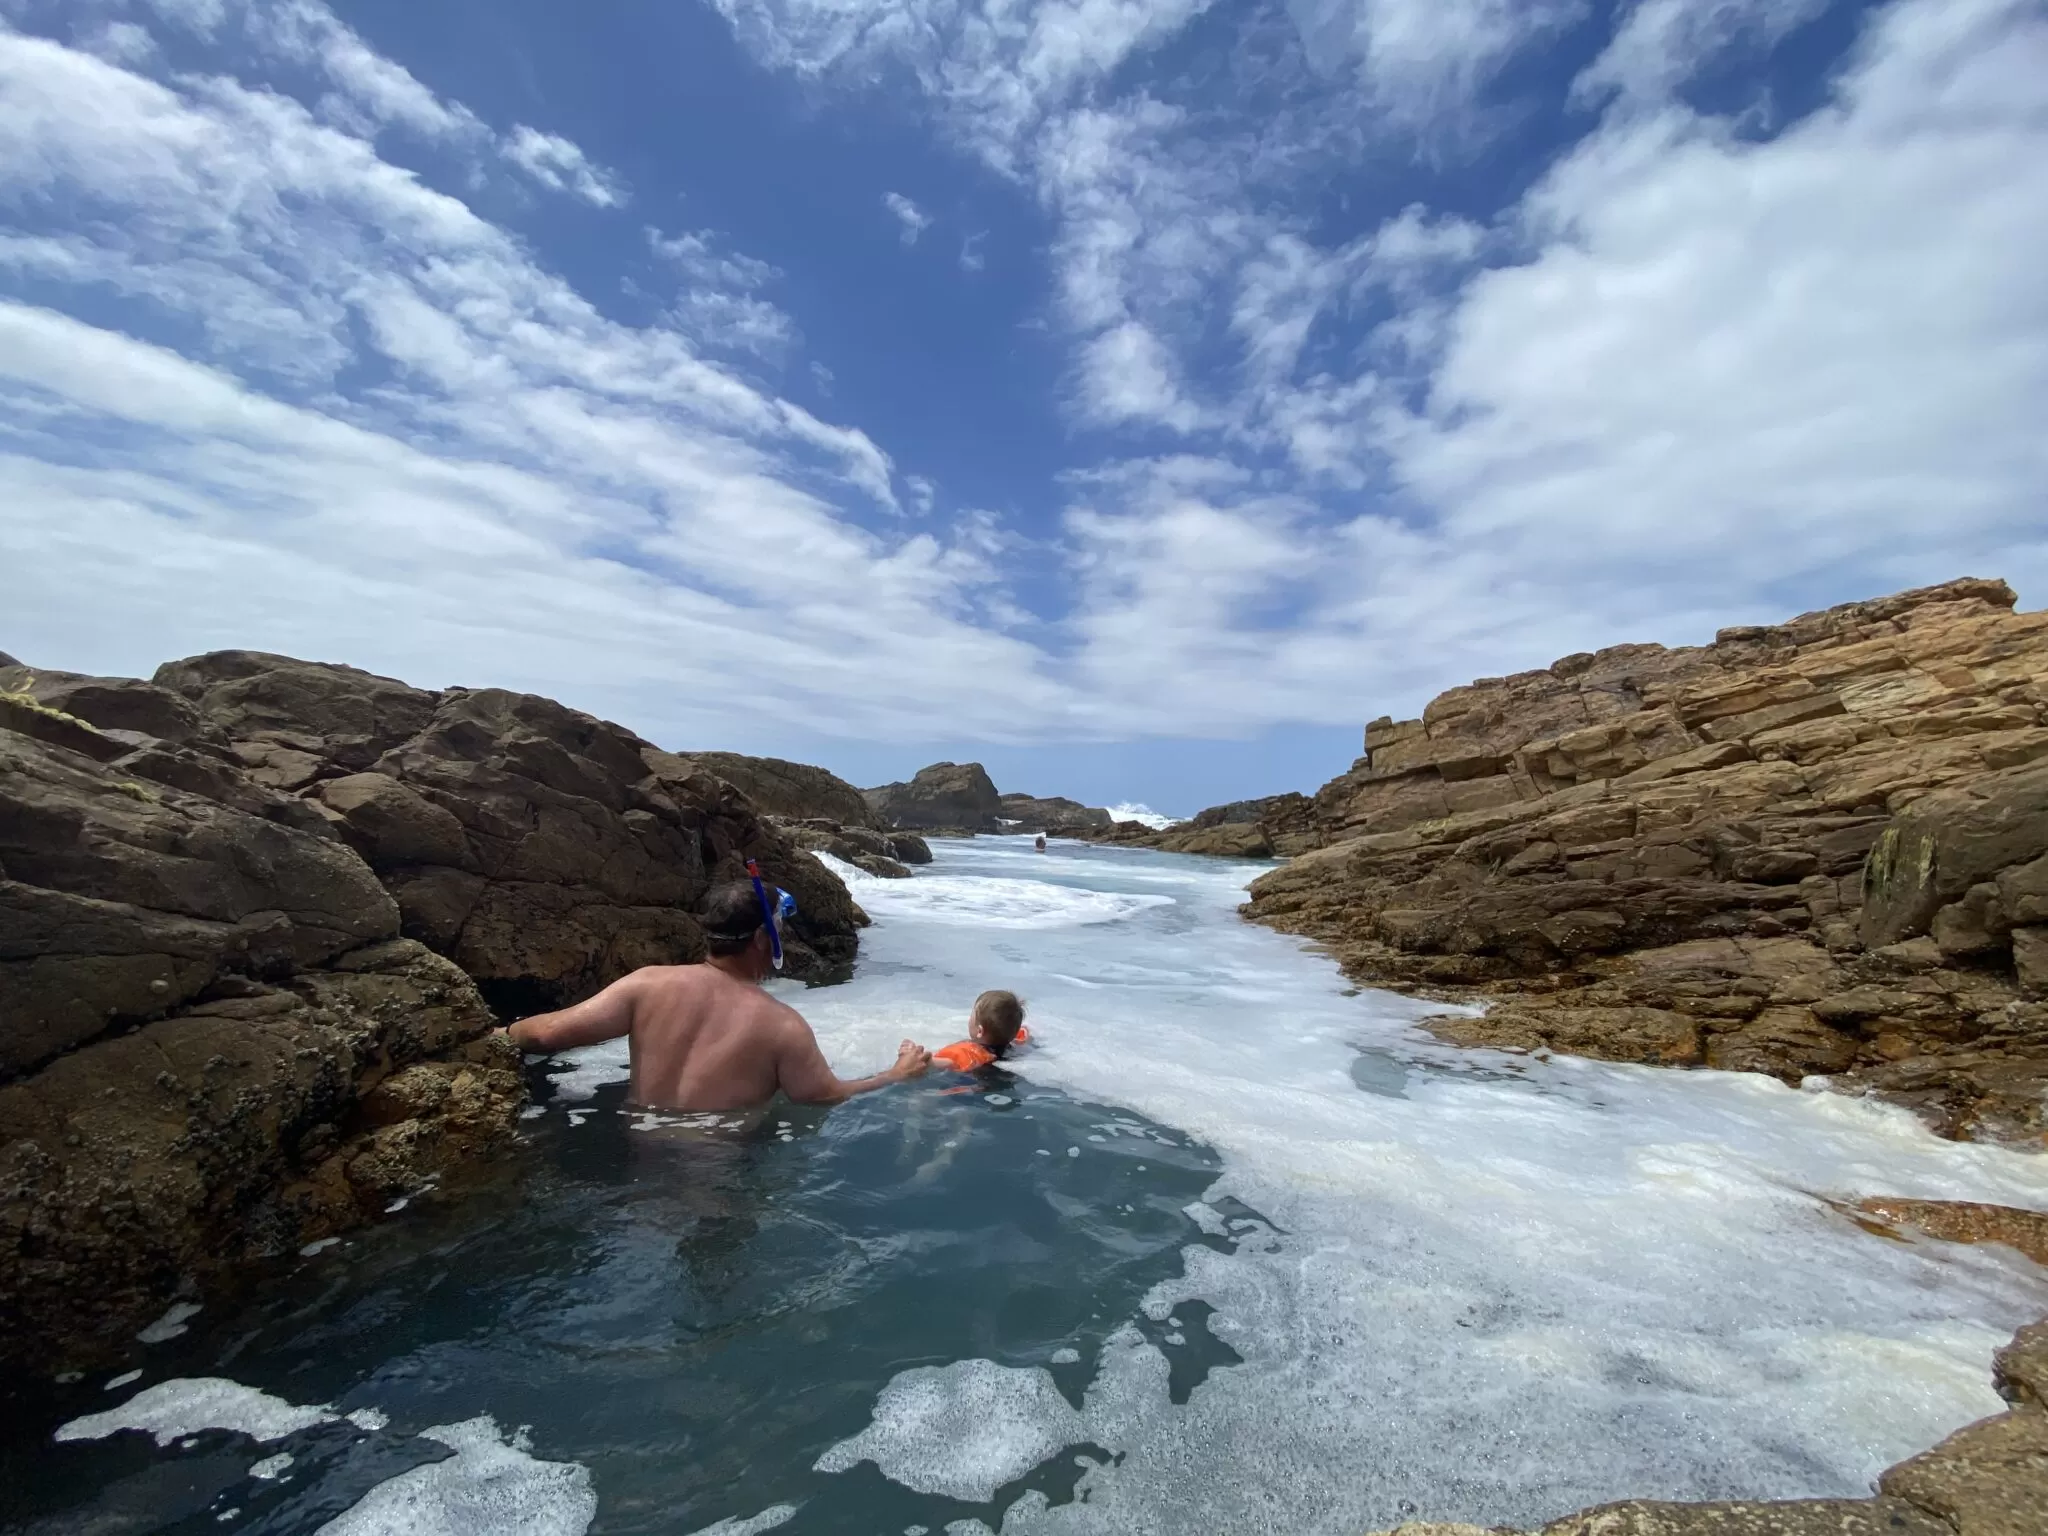 Snorkeling in natural rock pools